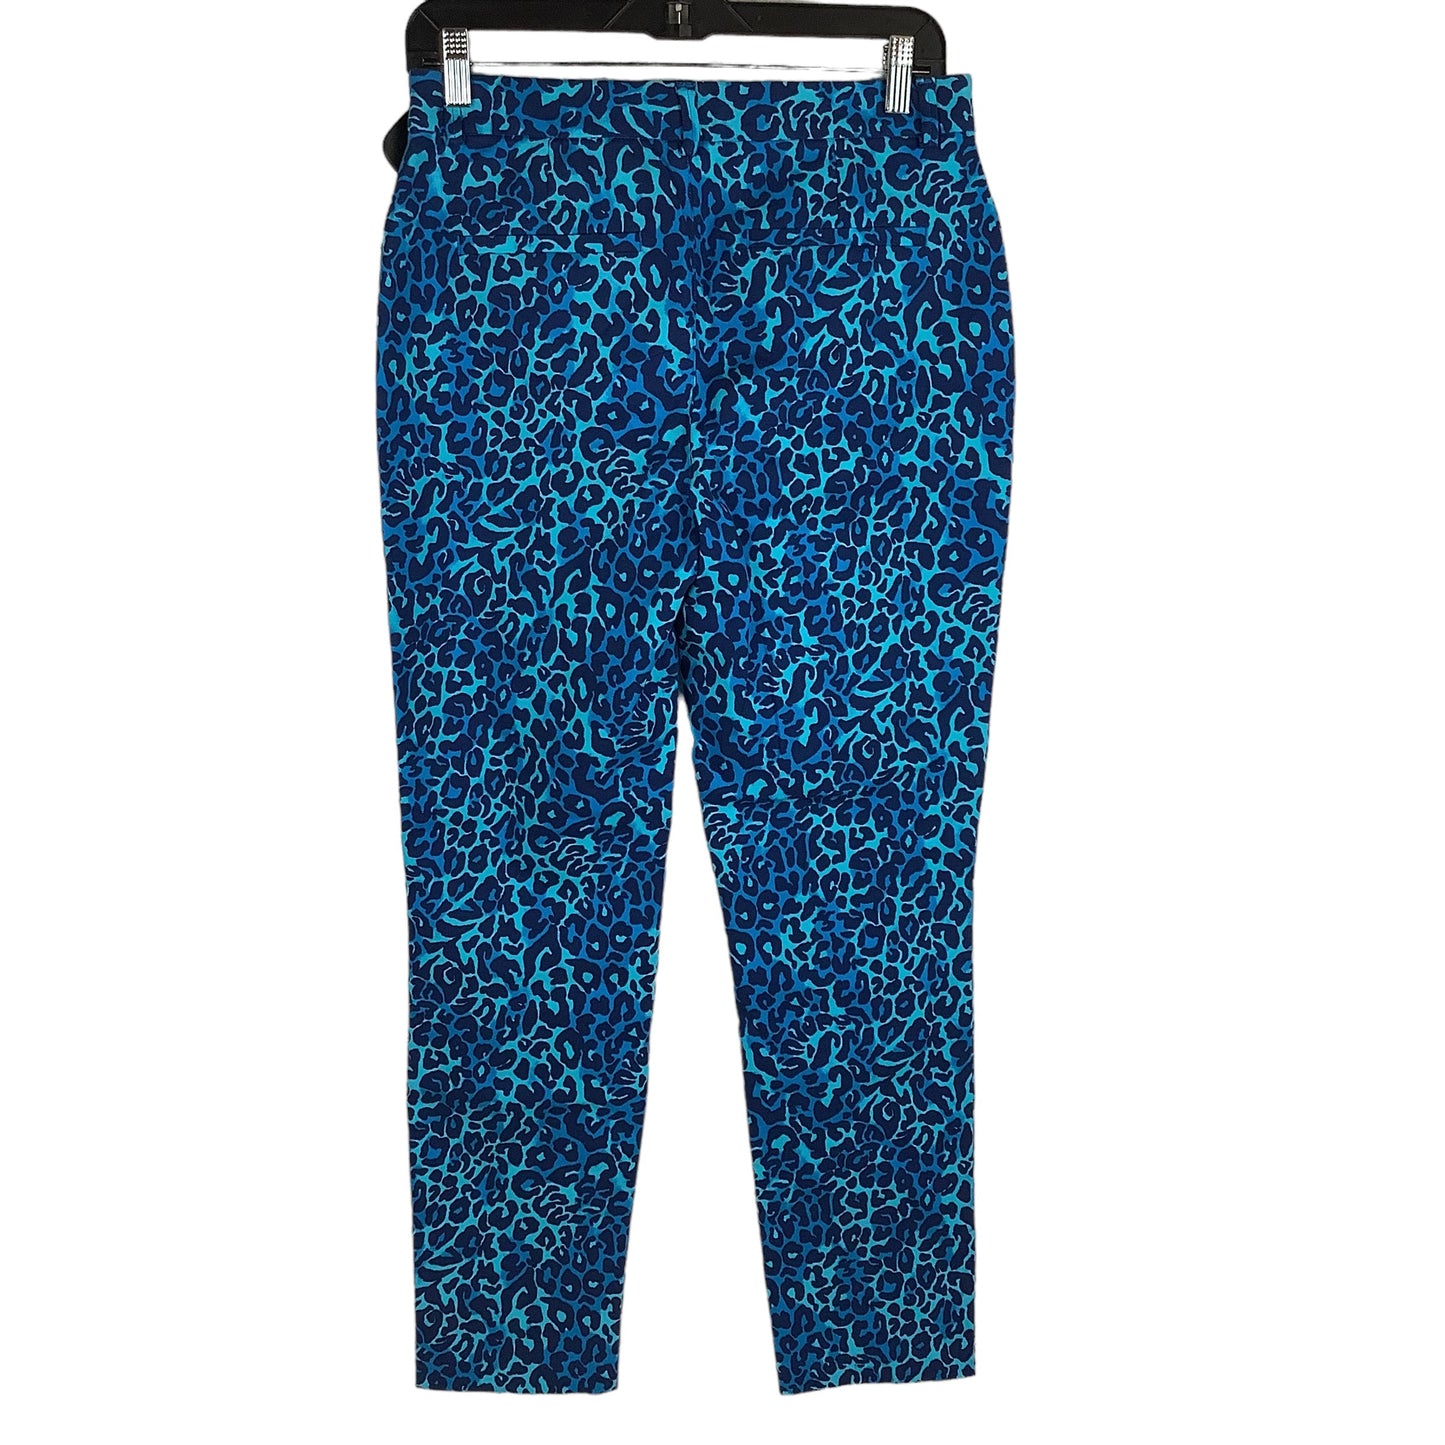 Blue Pants Designer Lilly Pulitzer, Size 8